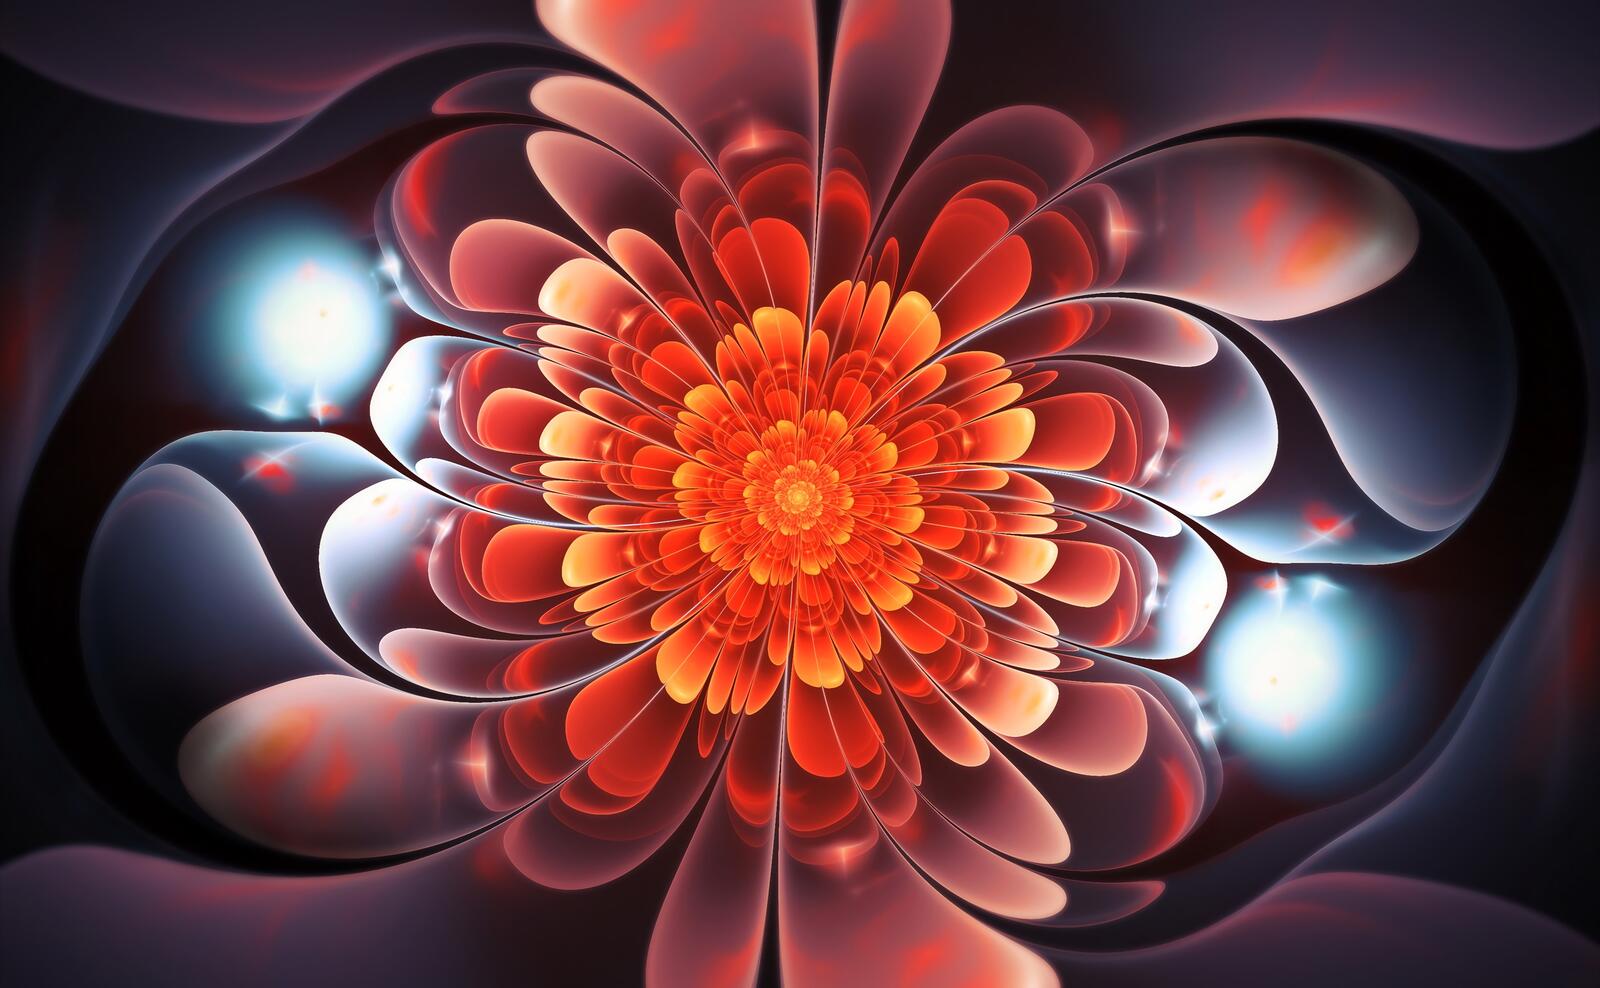 Wallpapers fractal flower twisted glowing on the desktop